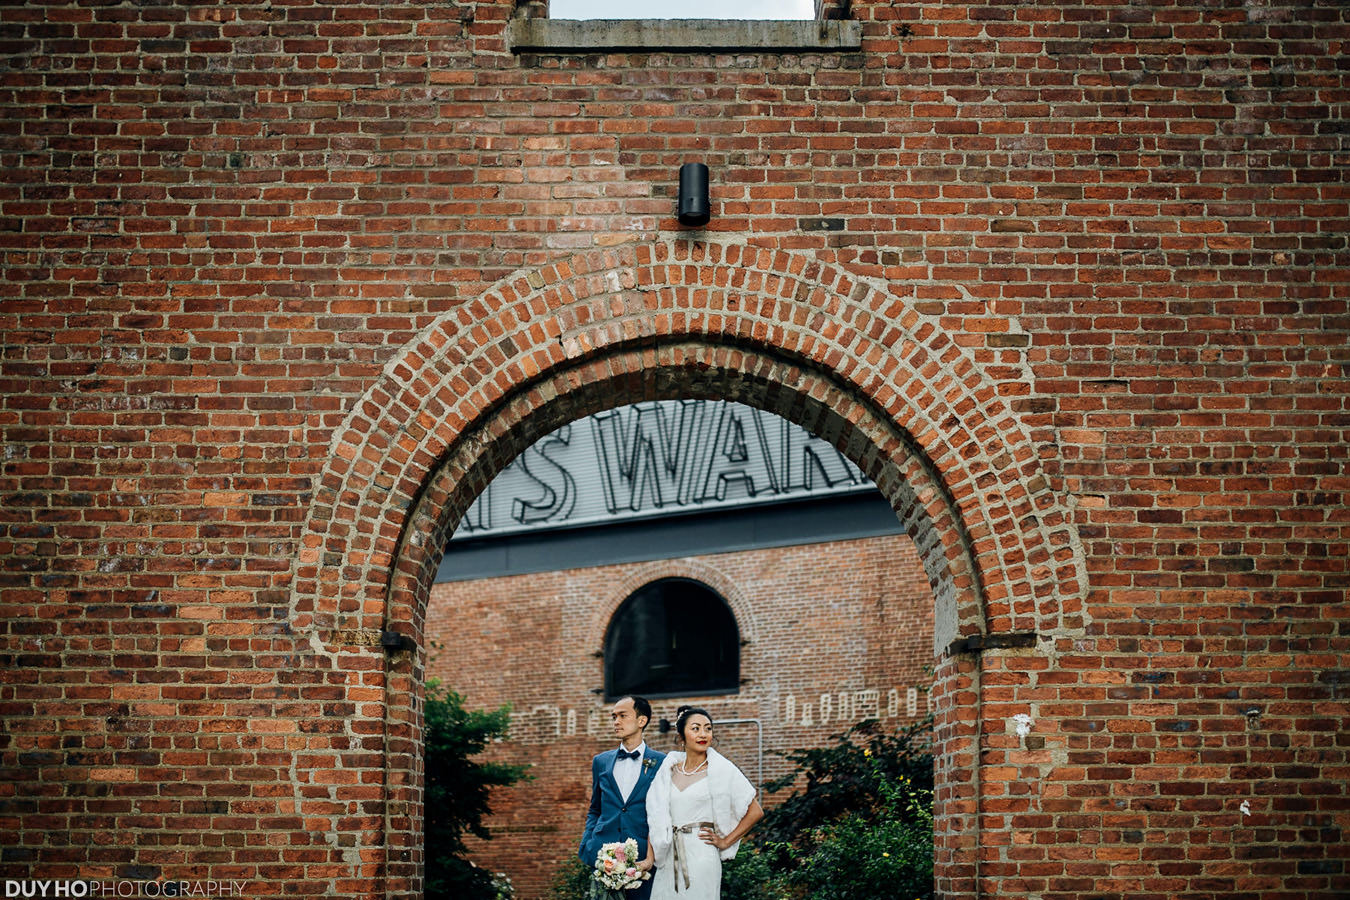 DUMBO Loft wedding photo | Brookyln, New York | Duy Ho Photography